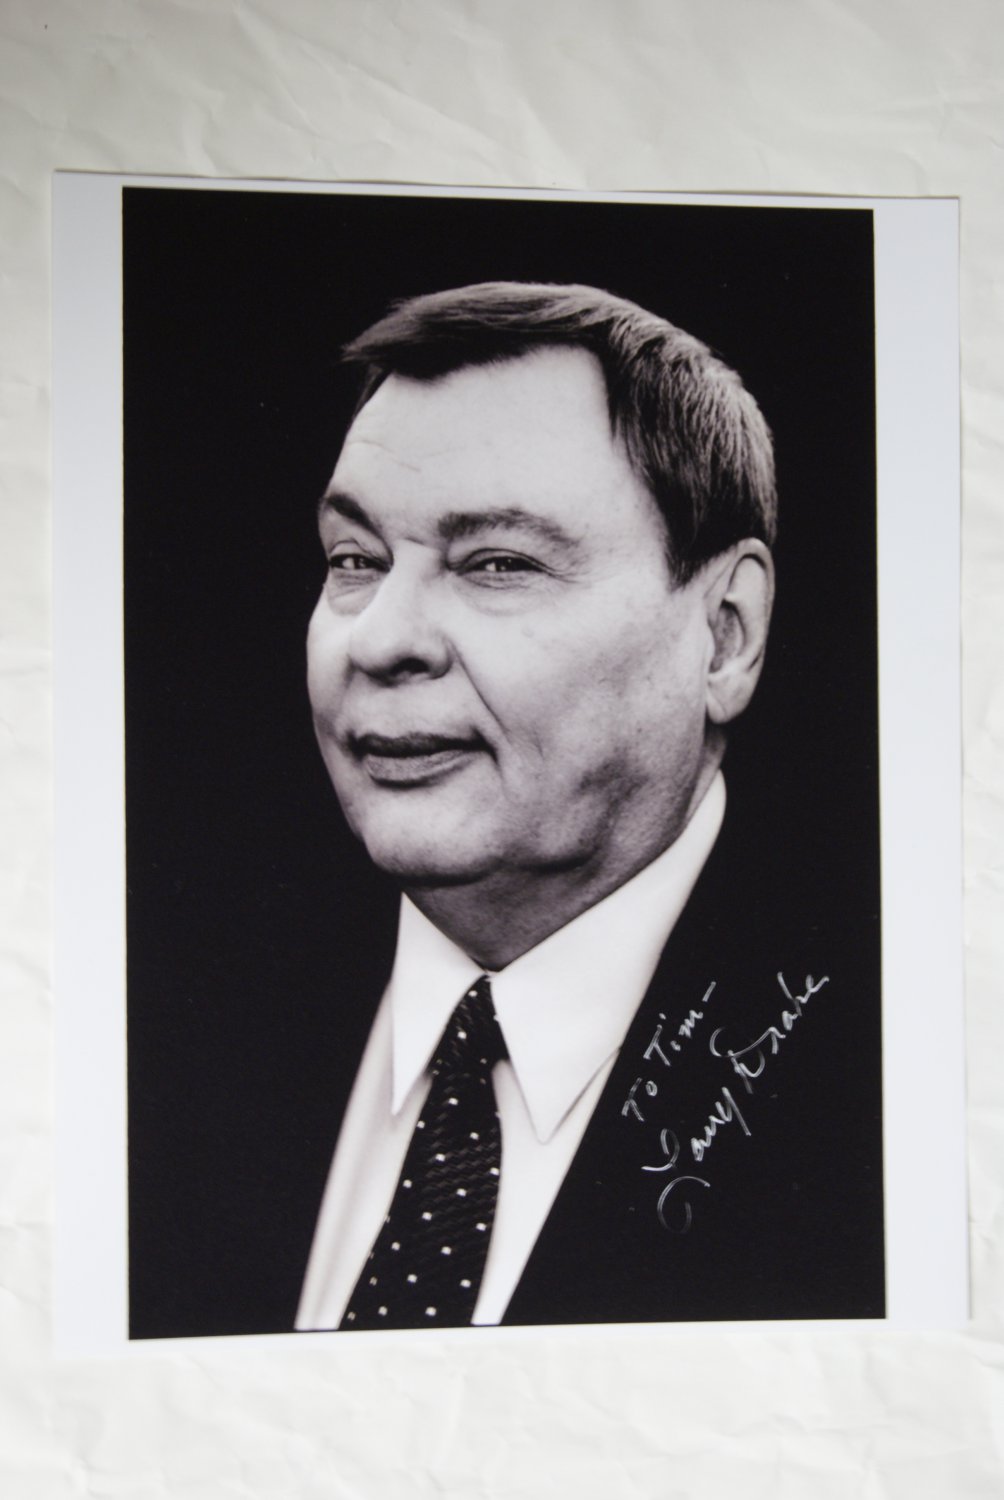 Larry Drake autographed photograph